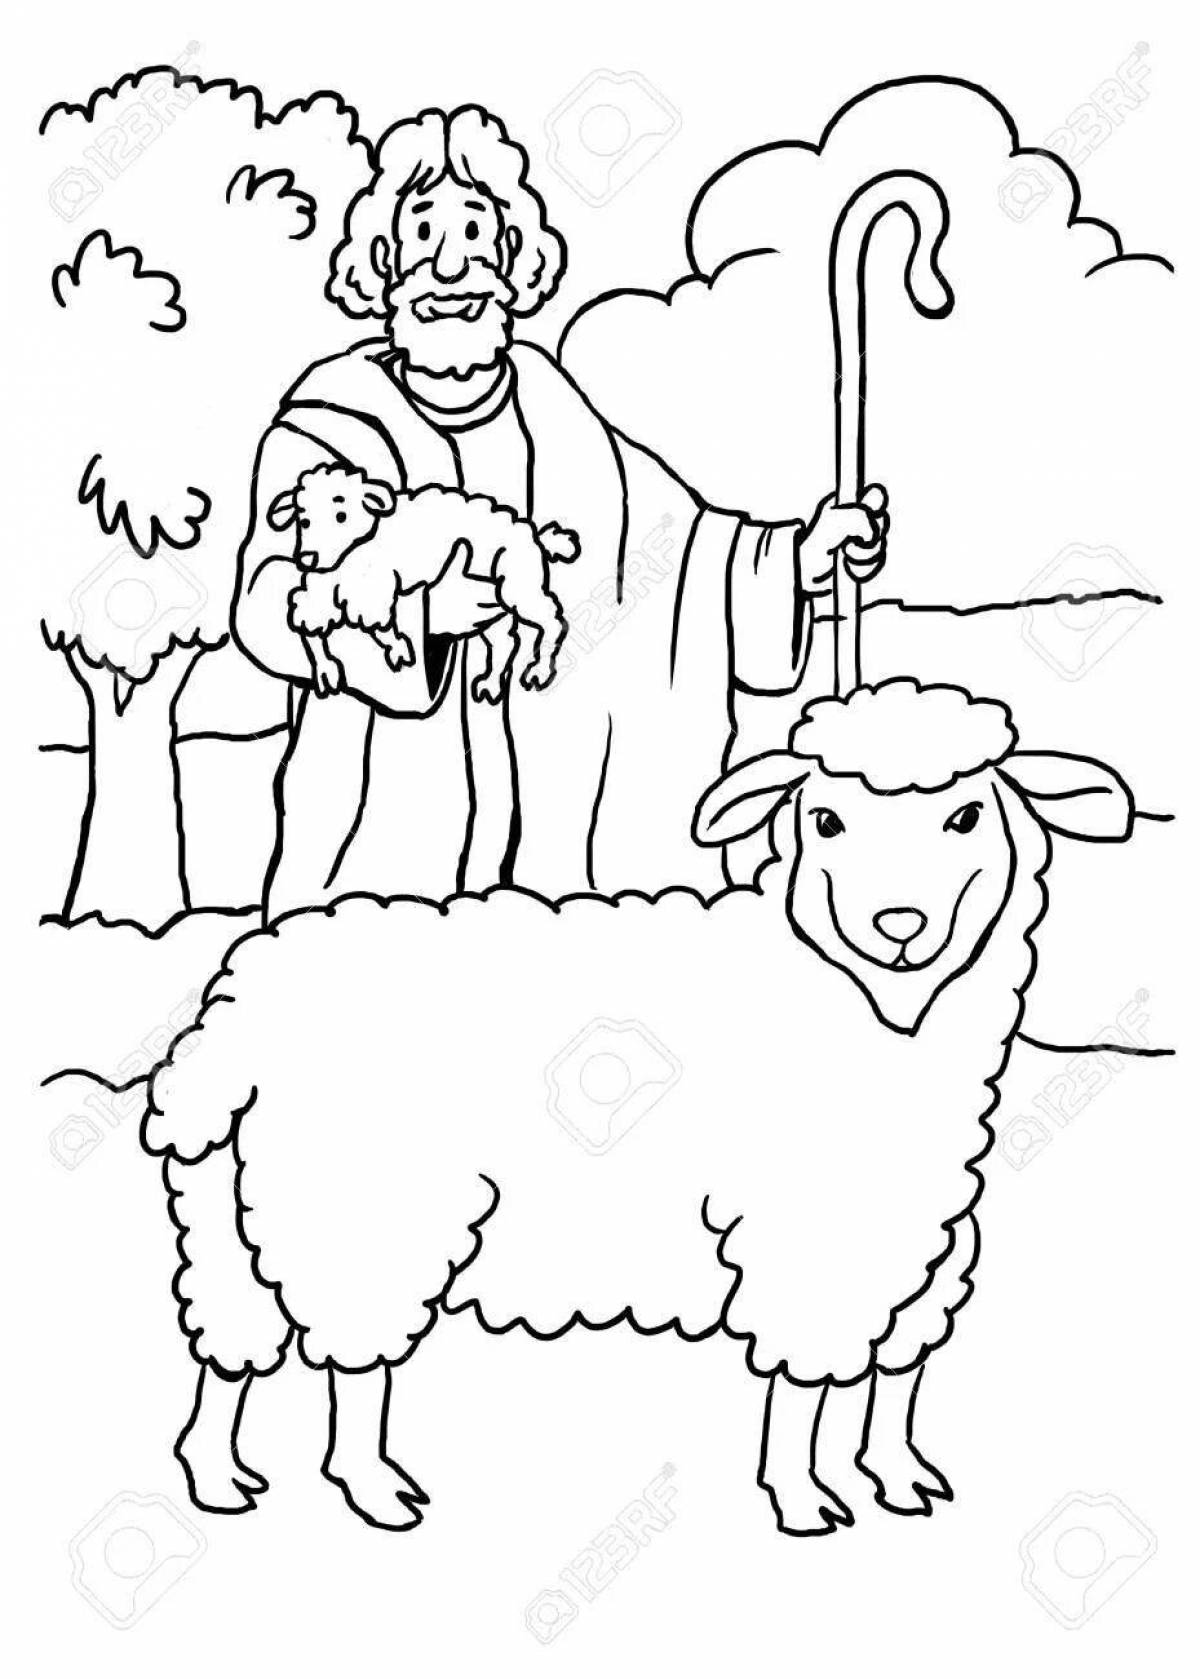 Coloring page festive shepherd lel